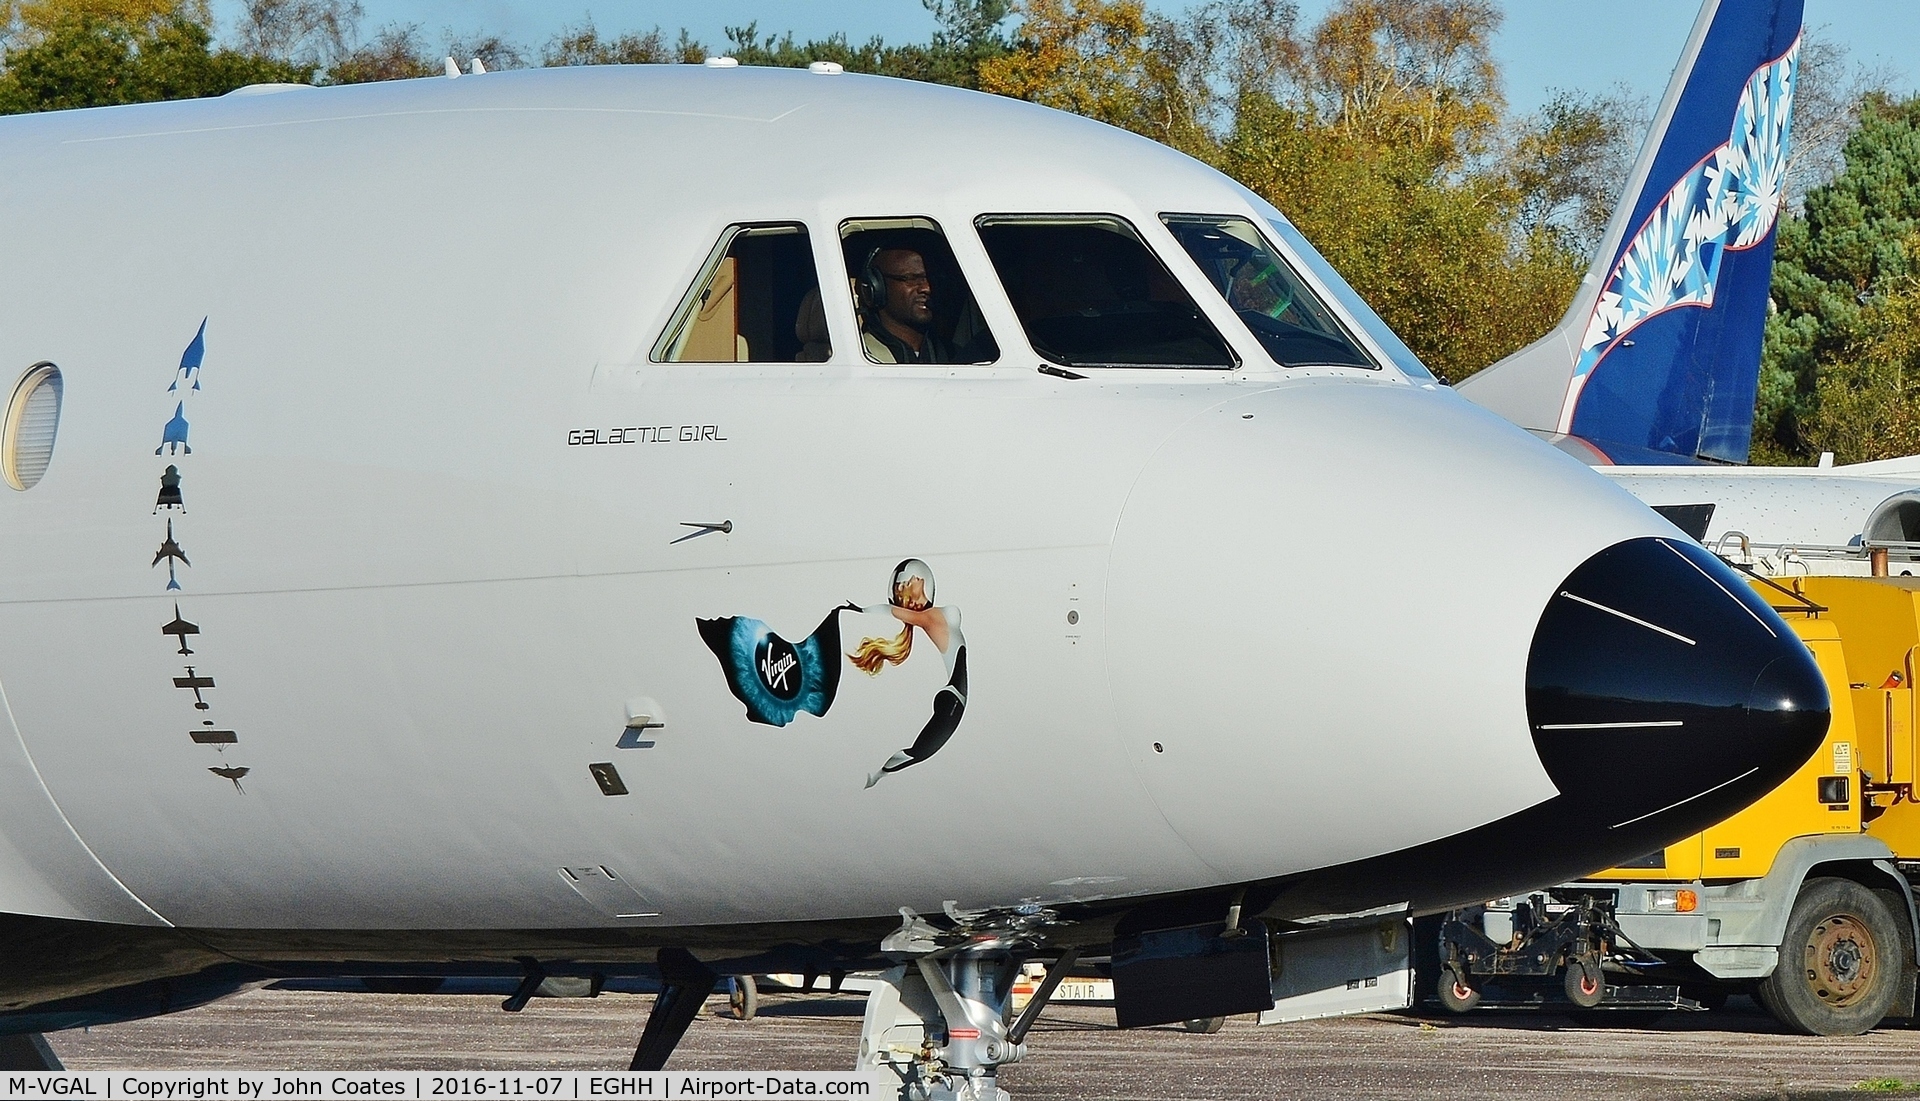 M-VGAL, 2008 Dassault Falcon 900EX EASy C/N 205, Galactic Girl logos